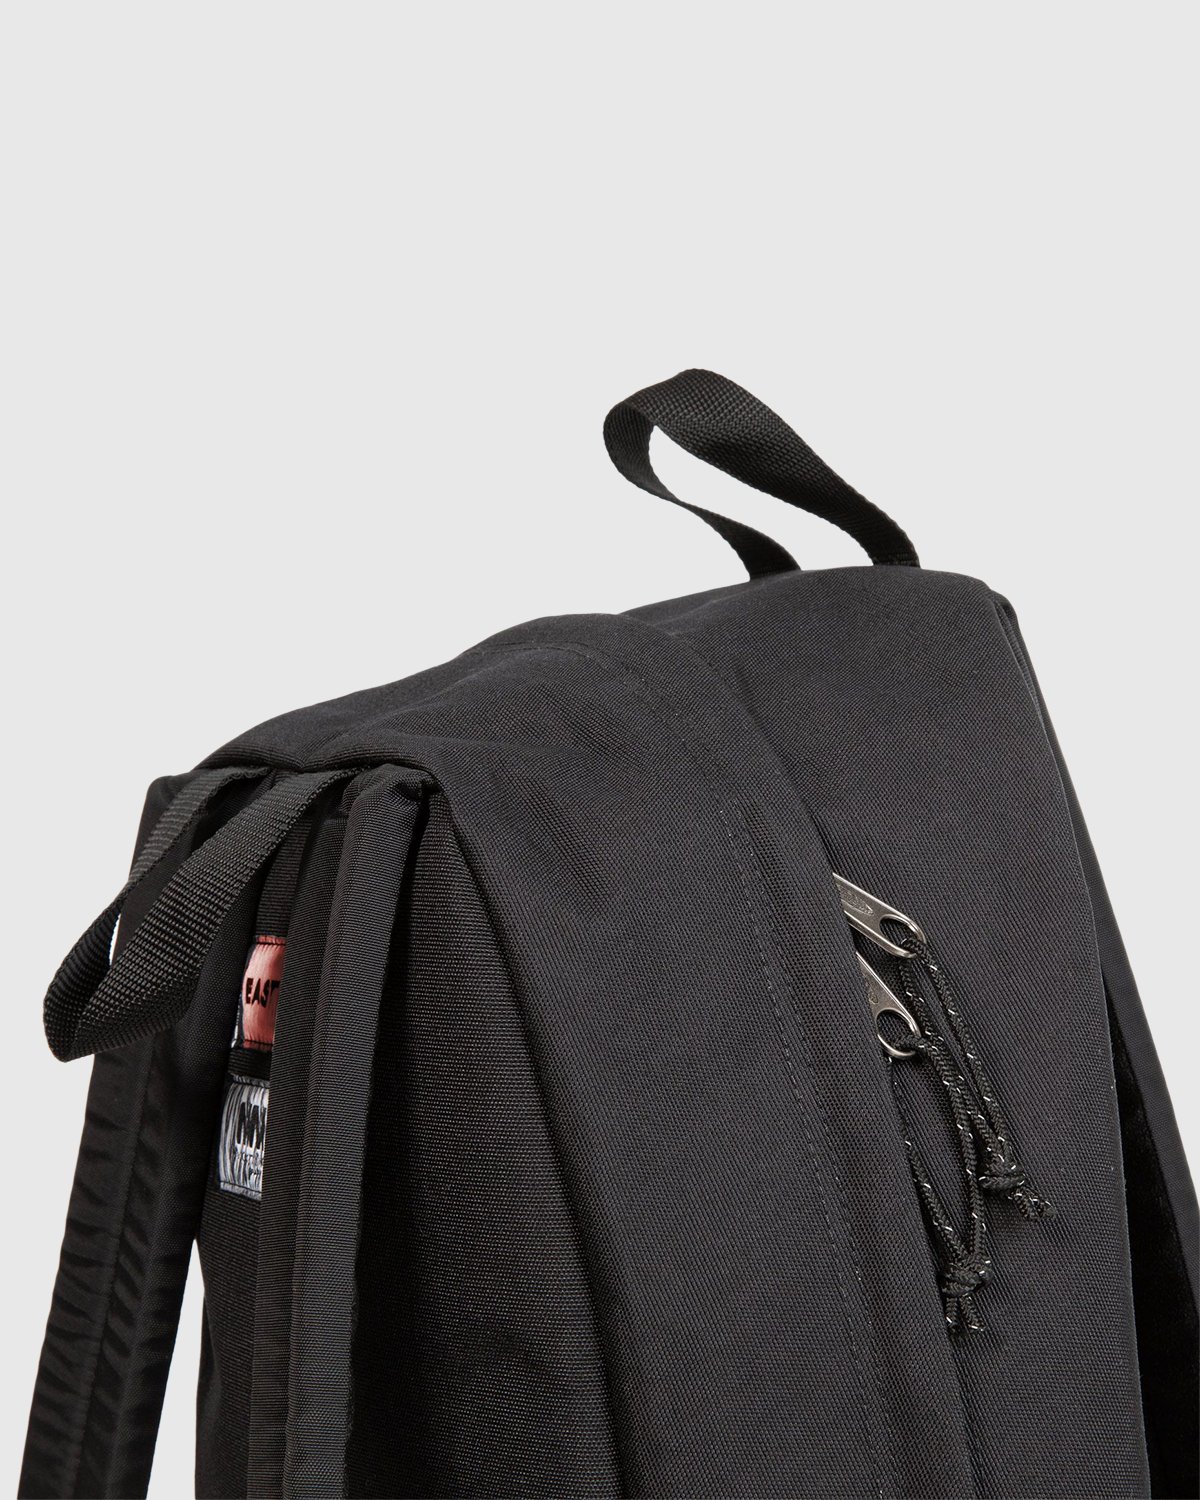 MM6 Maison Margiela x Eastpak - Padded XL Backpack Black - Accessories - Black - Image 6